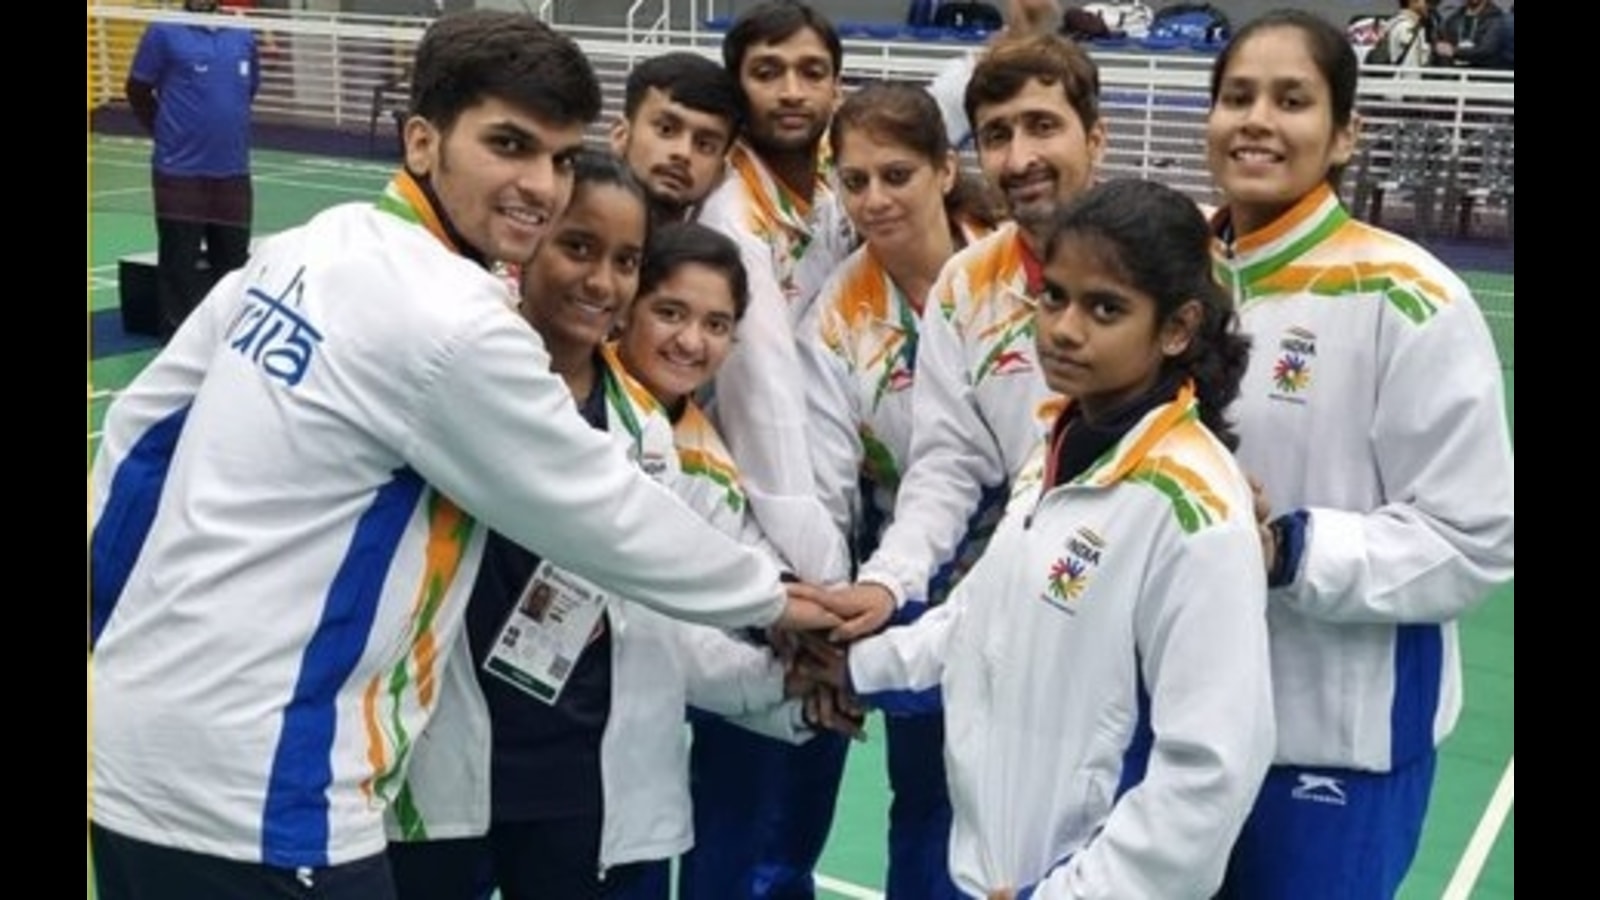 Deaflympics: Gorakhpur lady Aditya star of India’s golden effort in badminton